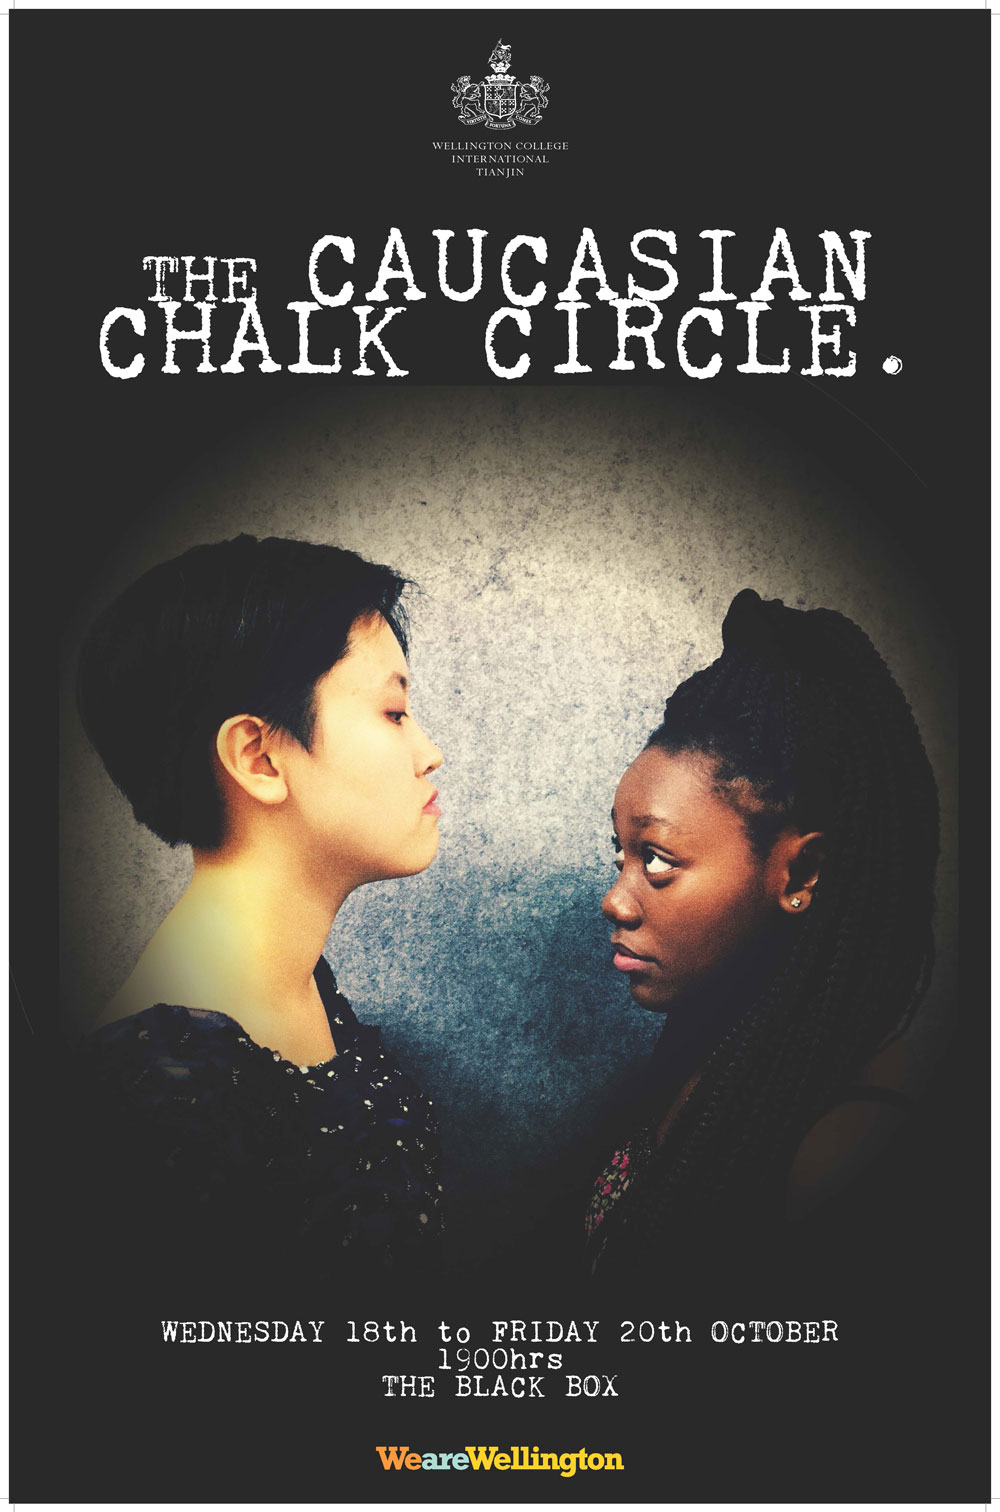 Senior School Play: Bertolt Brecht's The Caucasian Chalk Circle